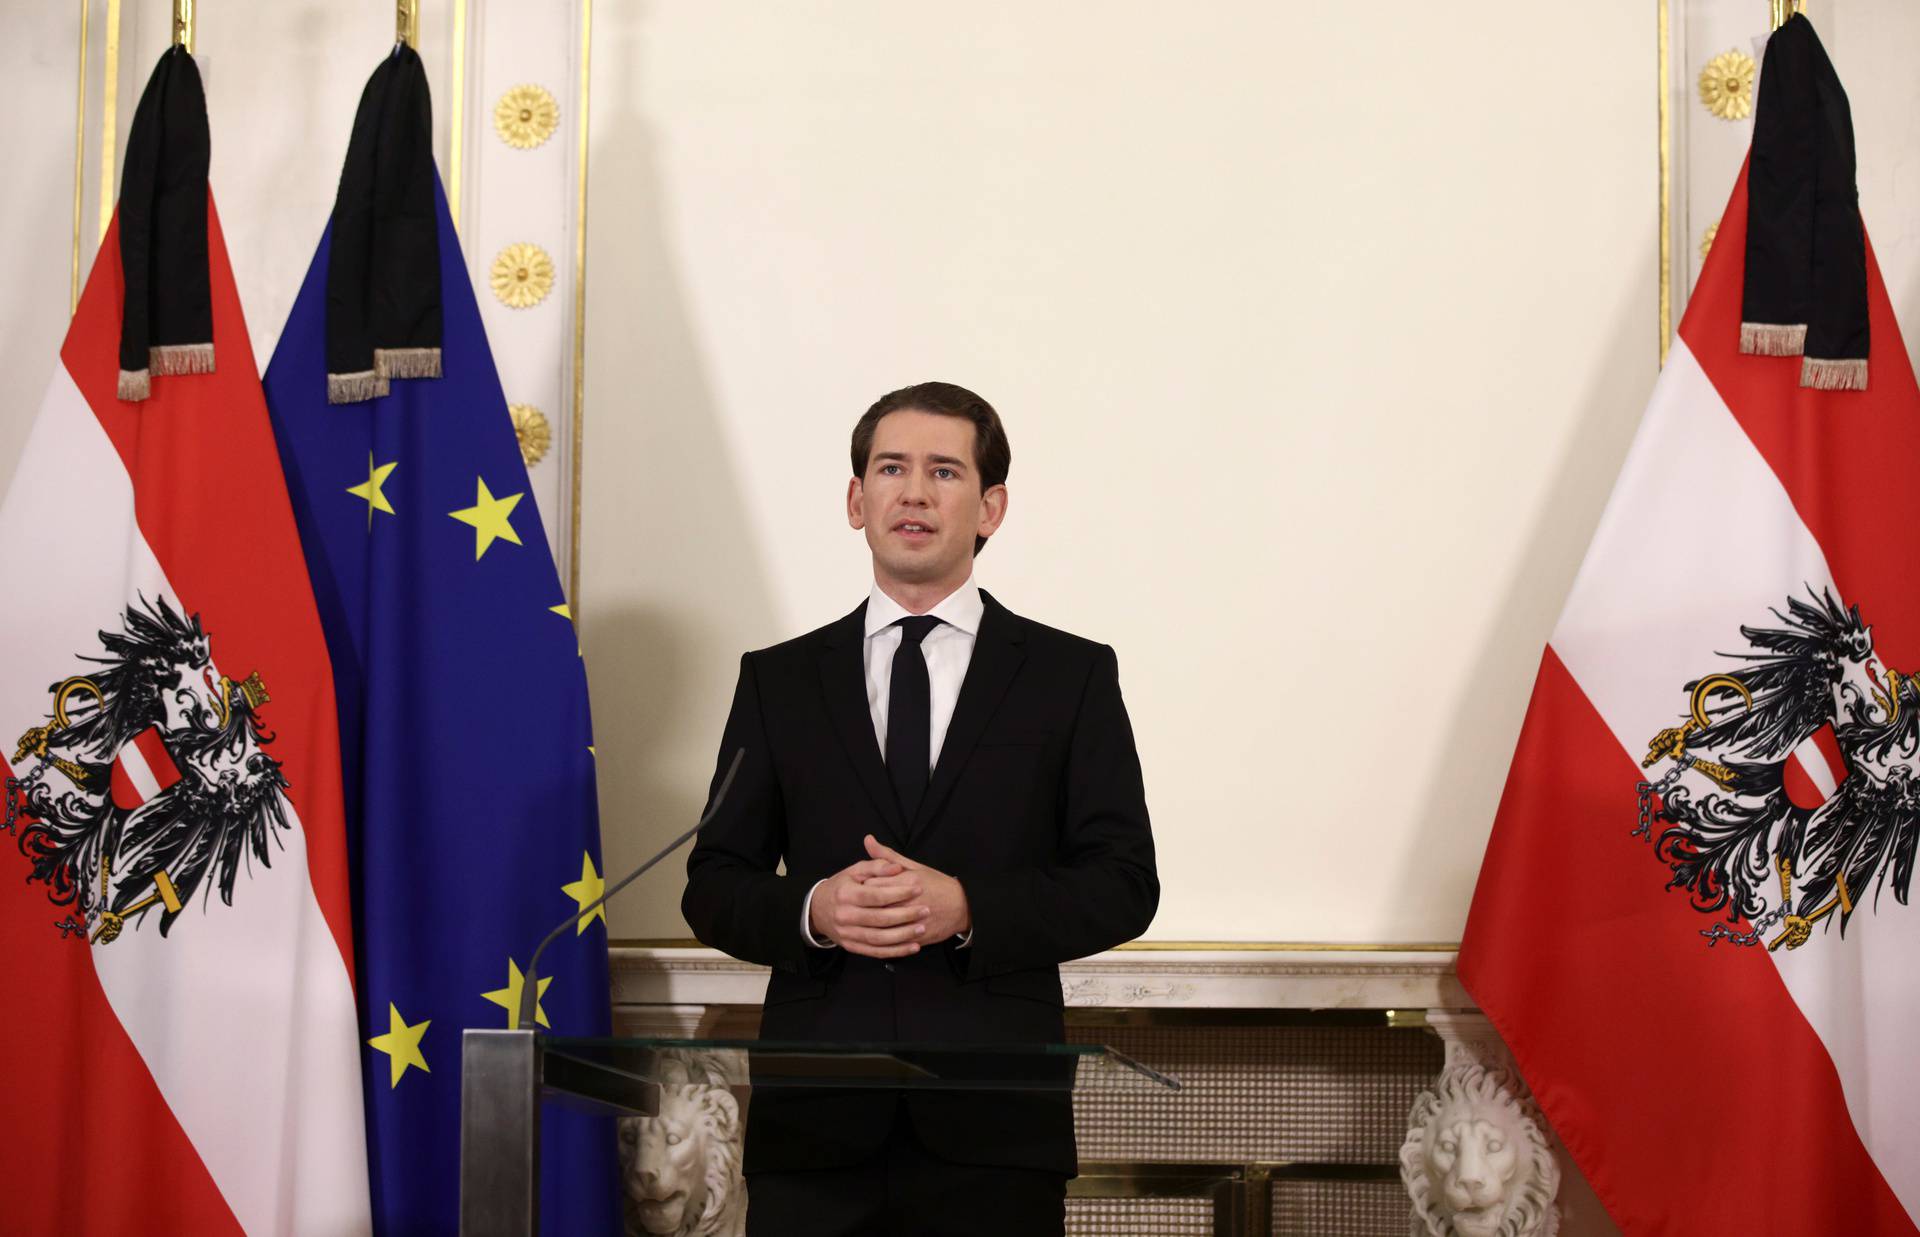 Austria's Chancellor Sebastian Kurz news conference after exchanges of gunfire in Vienna